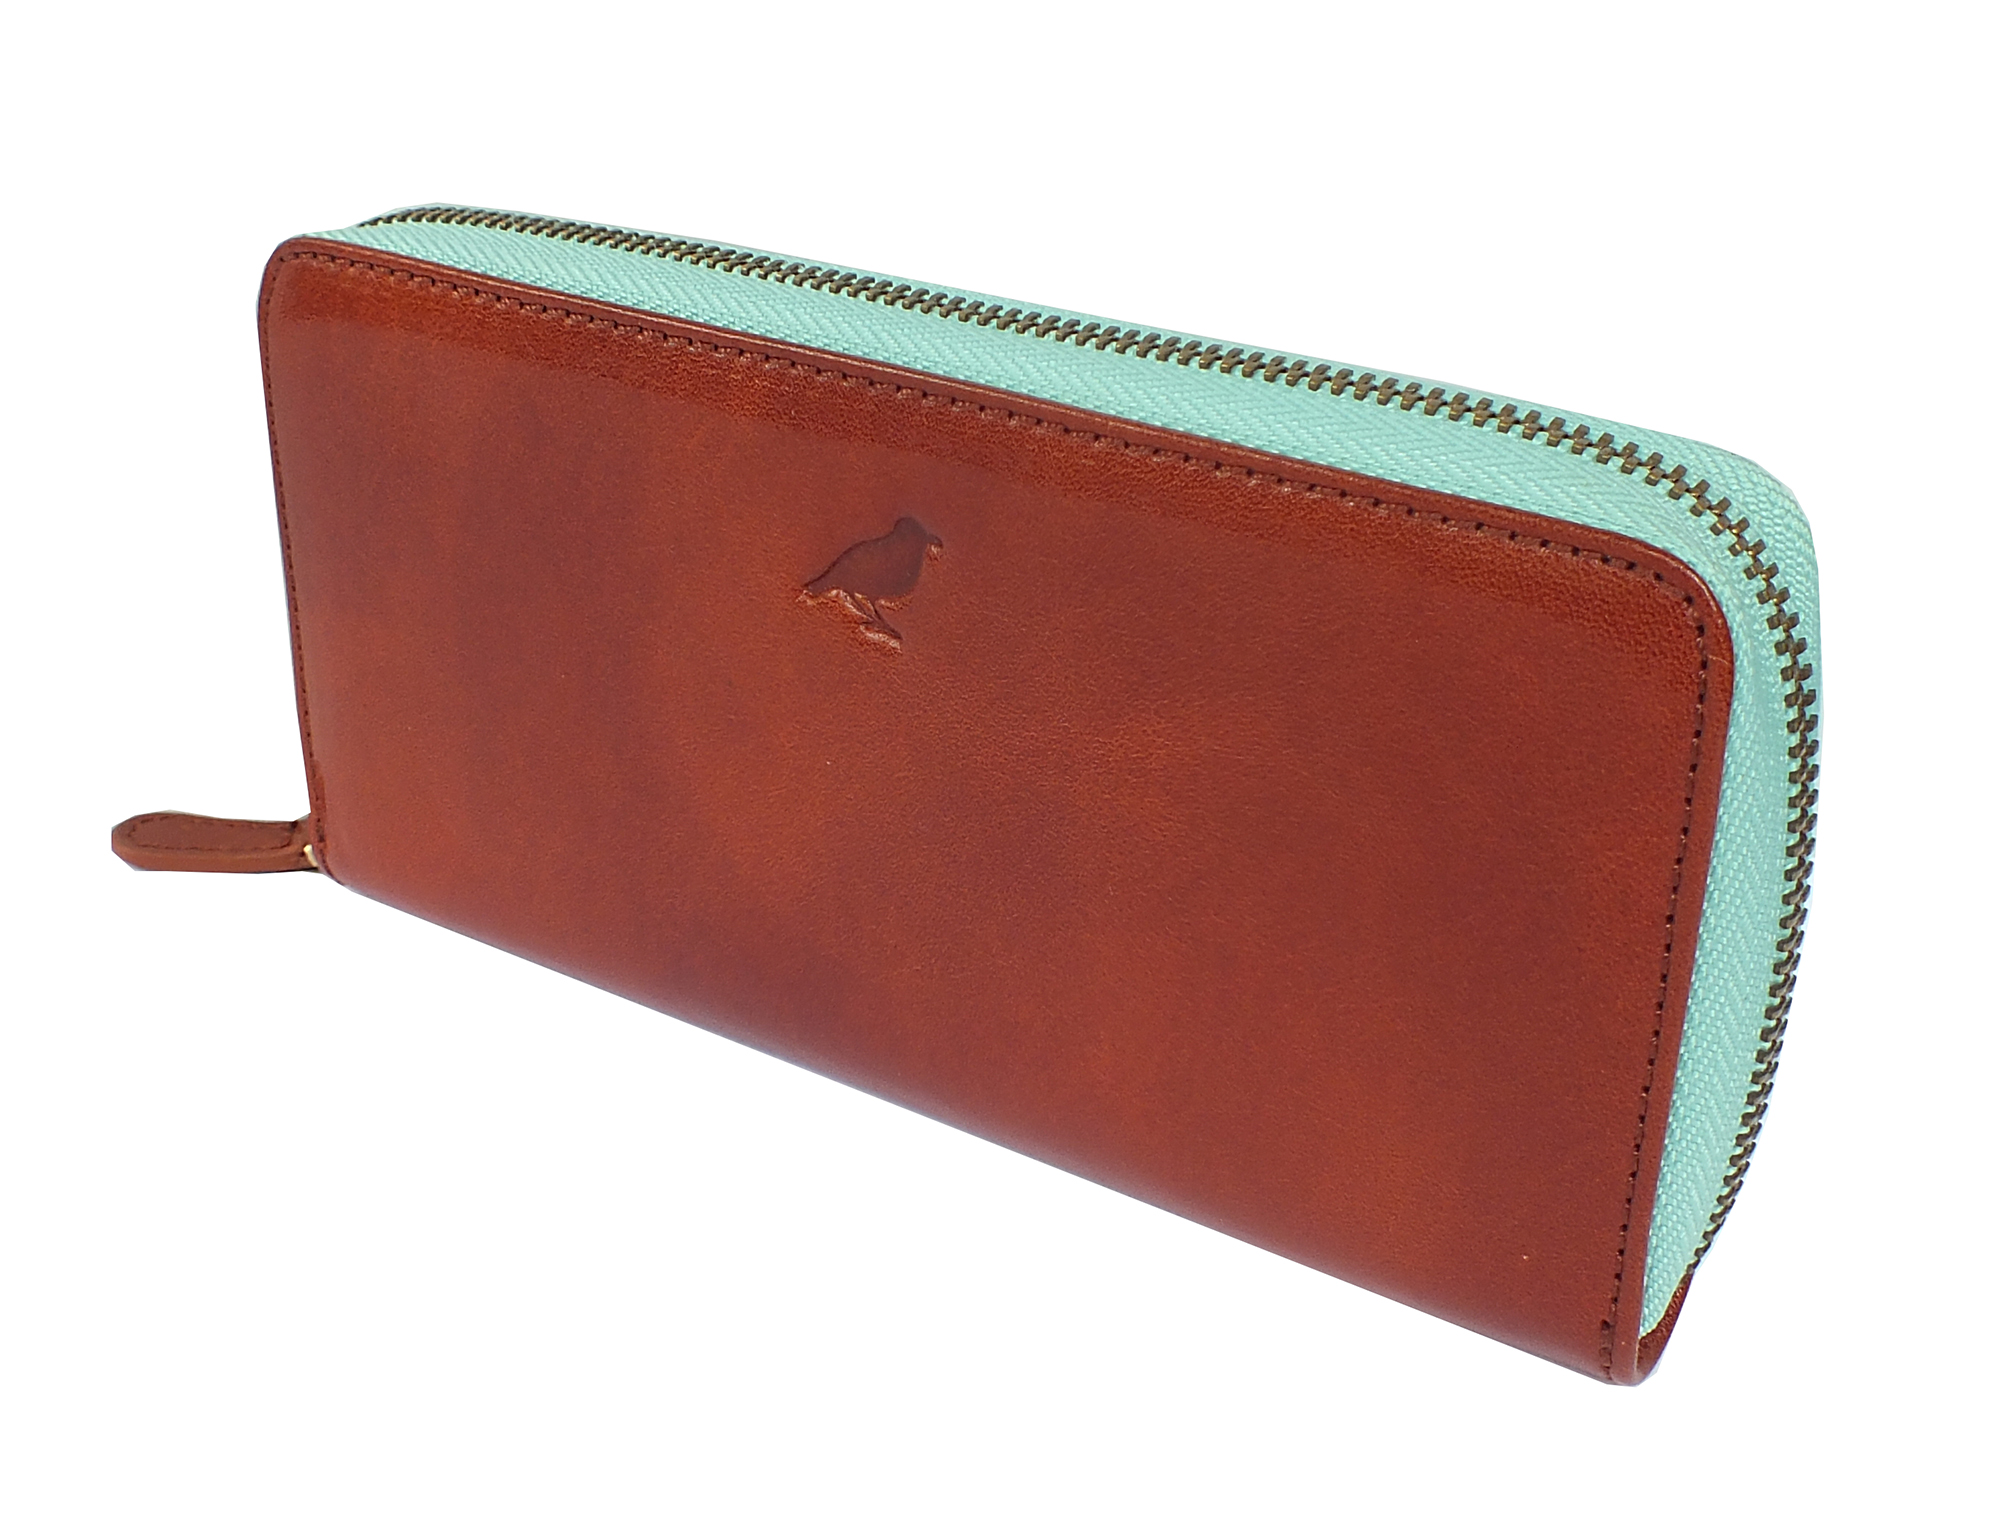 Ladies Leather Zip Around Wallet in Caramel with Blue zipper